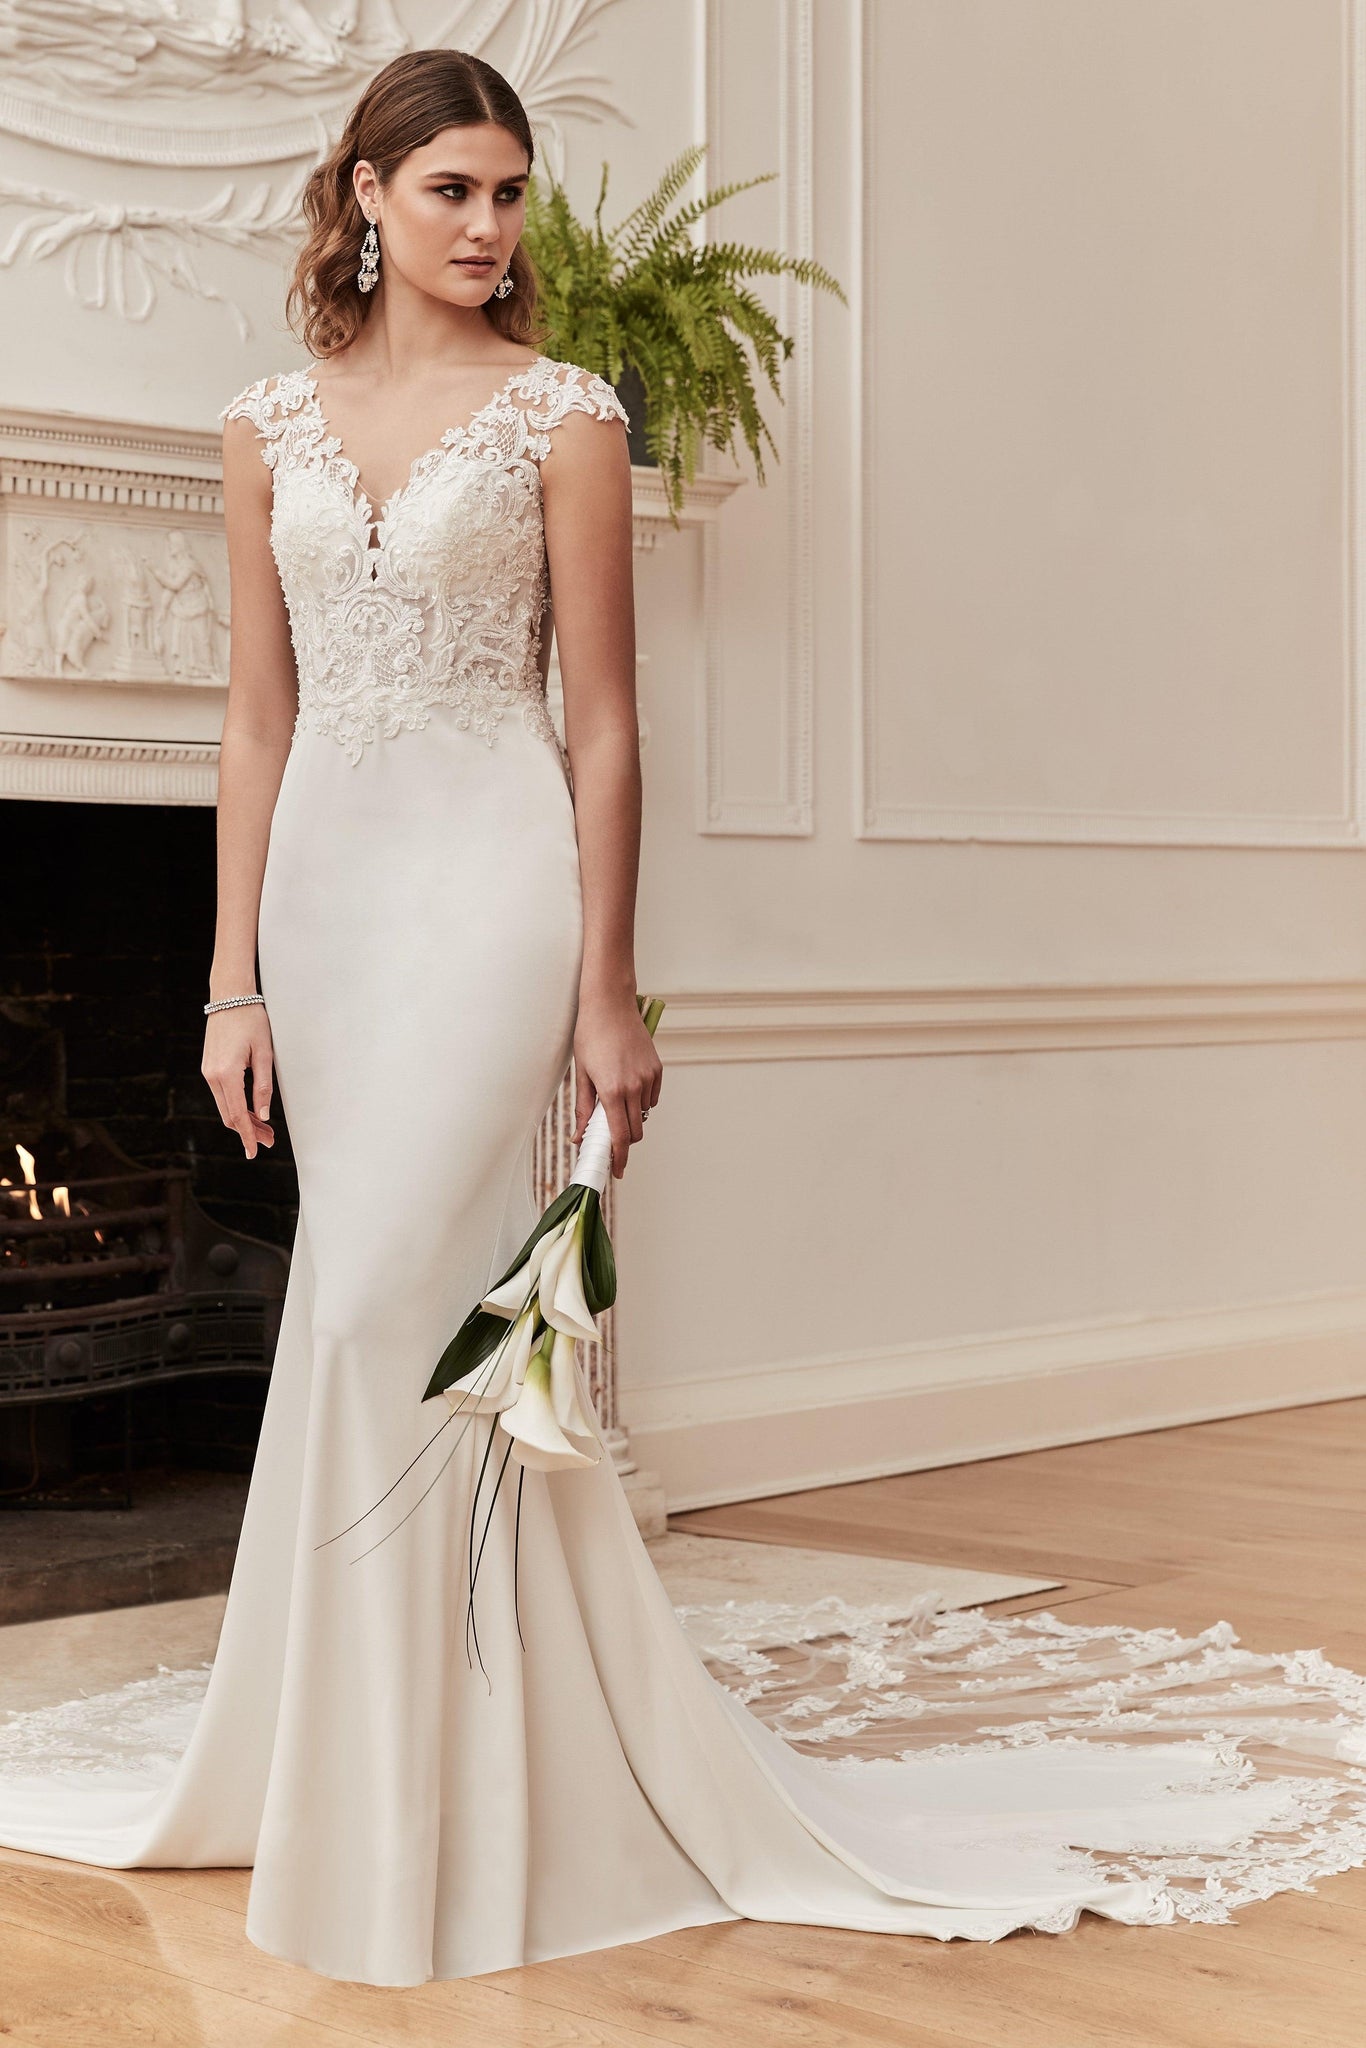 CHELMSFORD ESSEX WEDDING DRESS JENNIFER WREN BY ROMANTICA JW20320 — Adore  Bridal and Occasion Wear